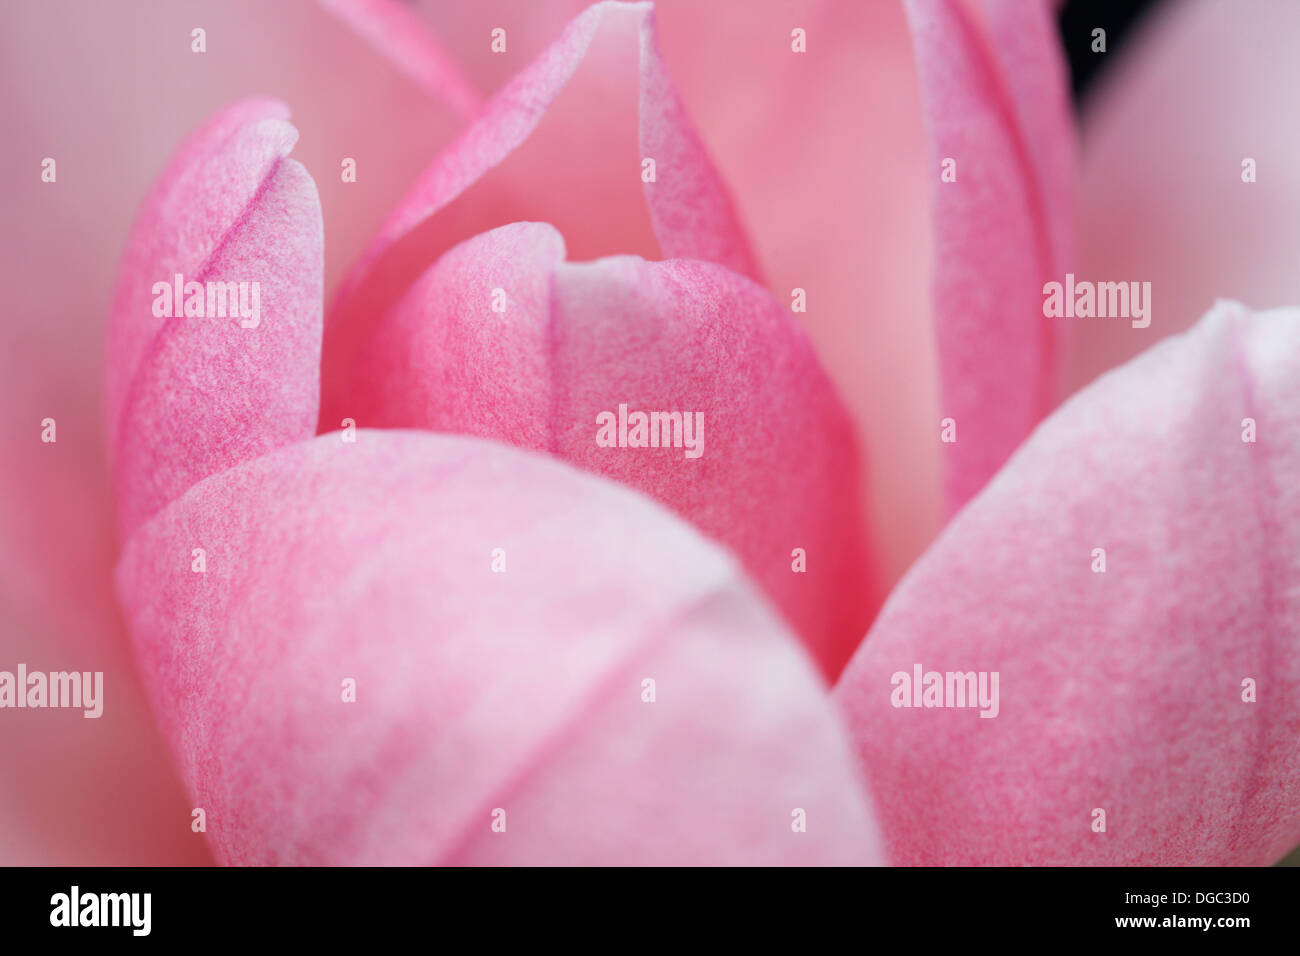 exquisite magnolia sprengeri pink bloom gently opening  Jane Ann Butler Photography  JABP1082 Stock Photo